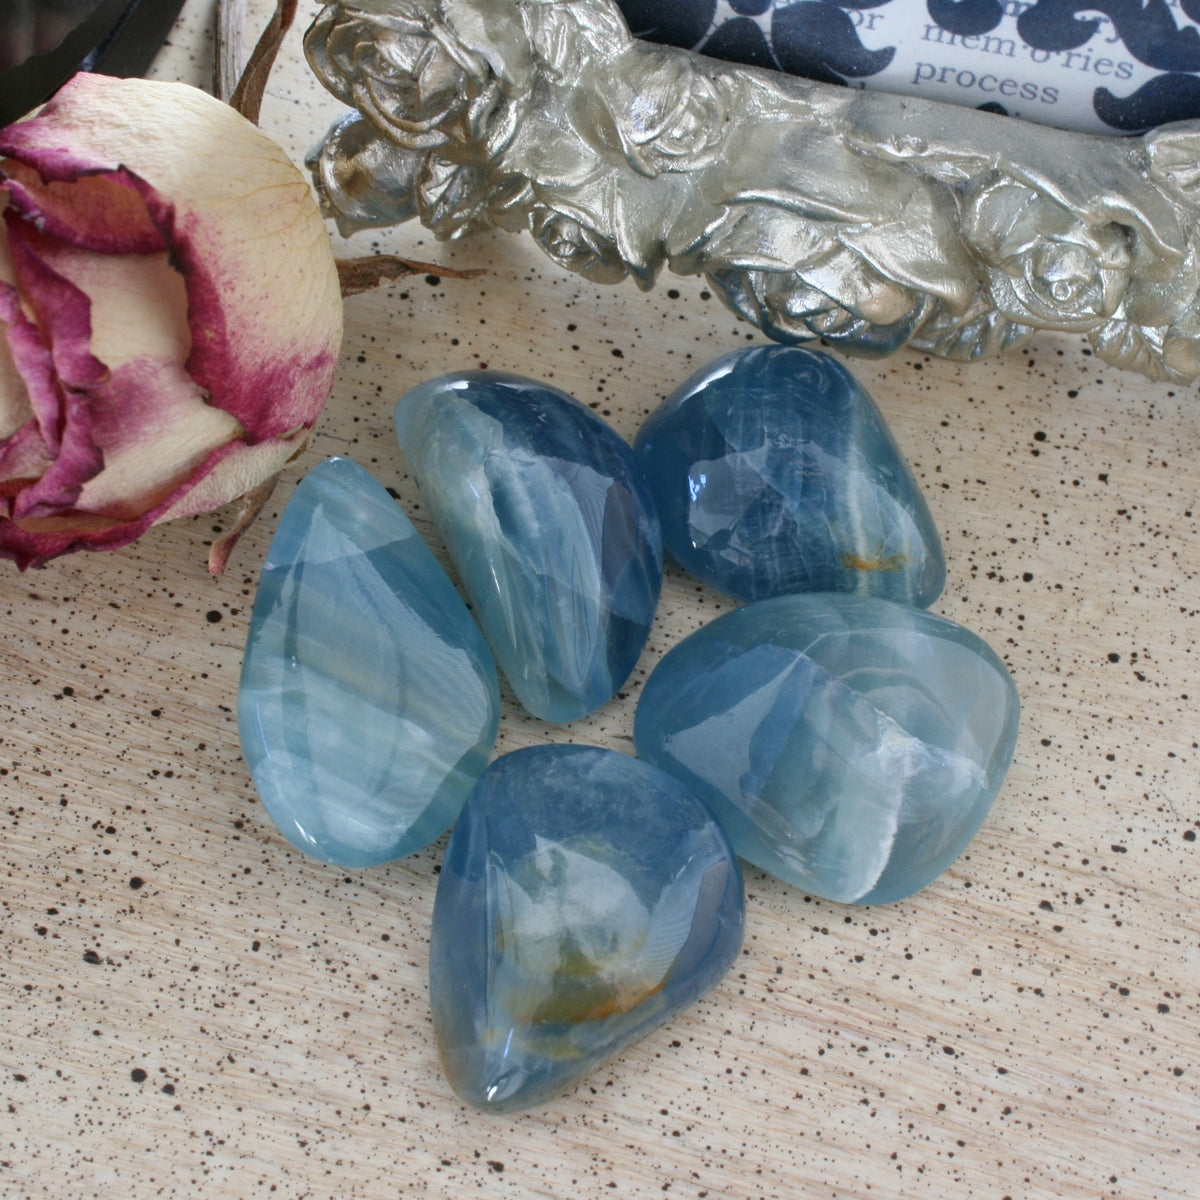 Blue Calcite / Blue Onyx Tumbled Stone from Argentina, also called Lemurian Aquatine Calcite, TUM16